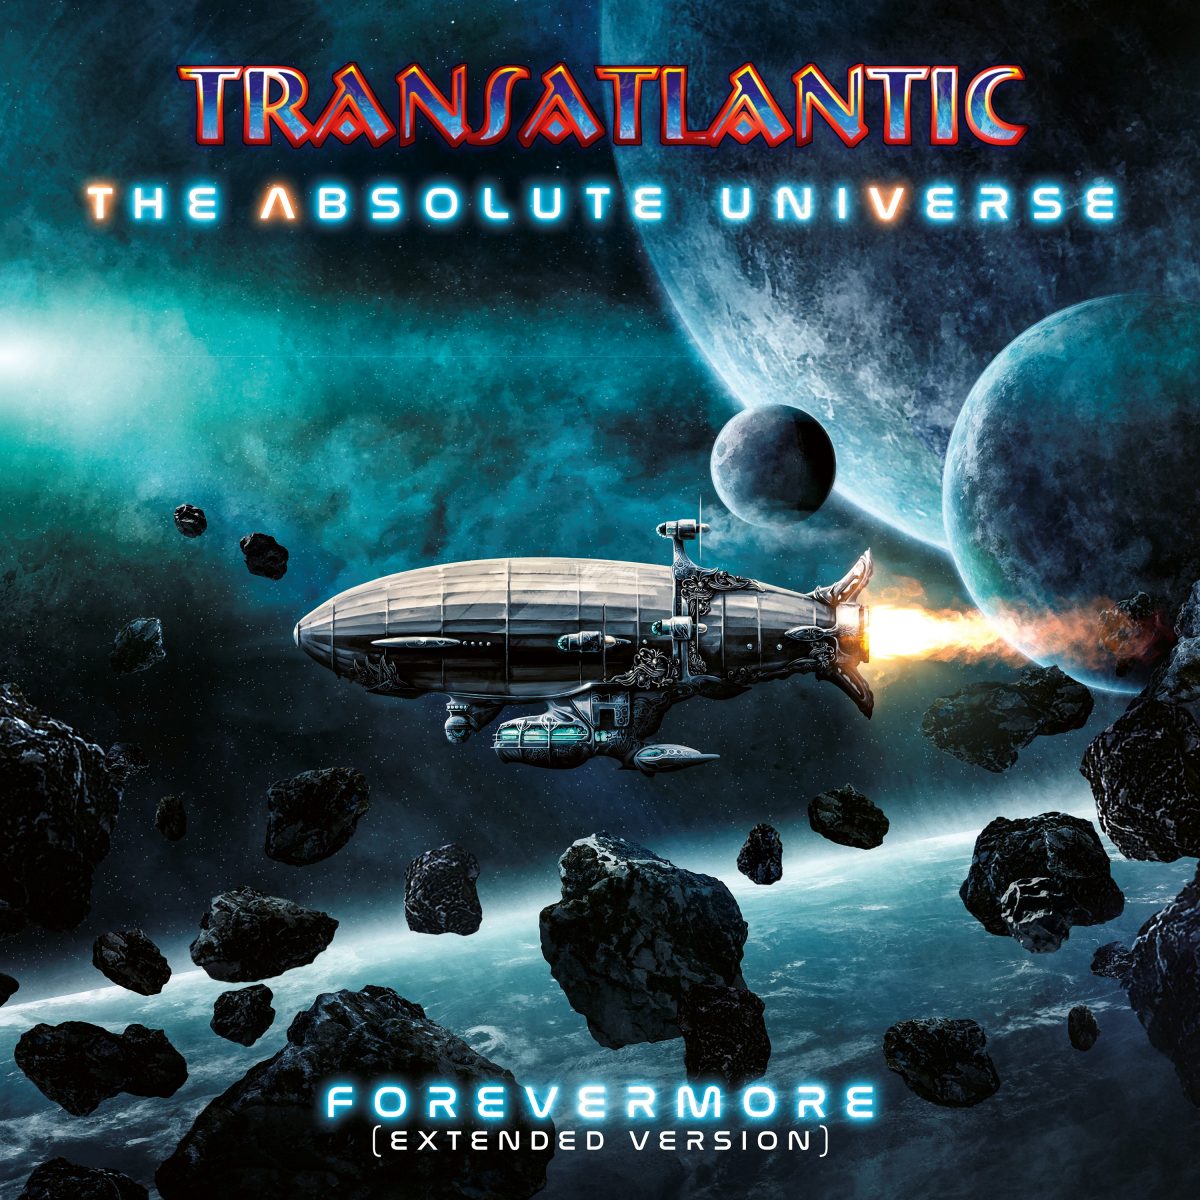 TRANSATLANTIC - Albumcover - The absolute universe - forevermore